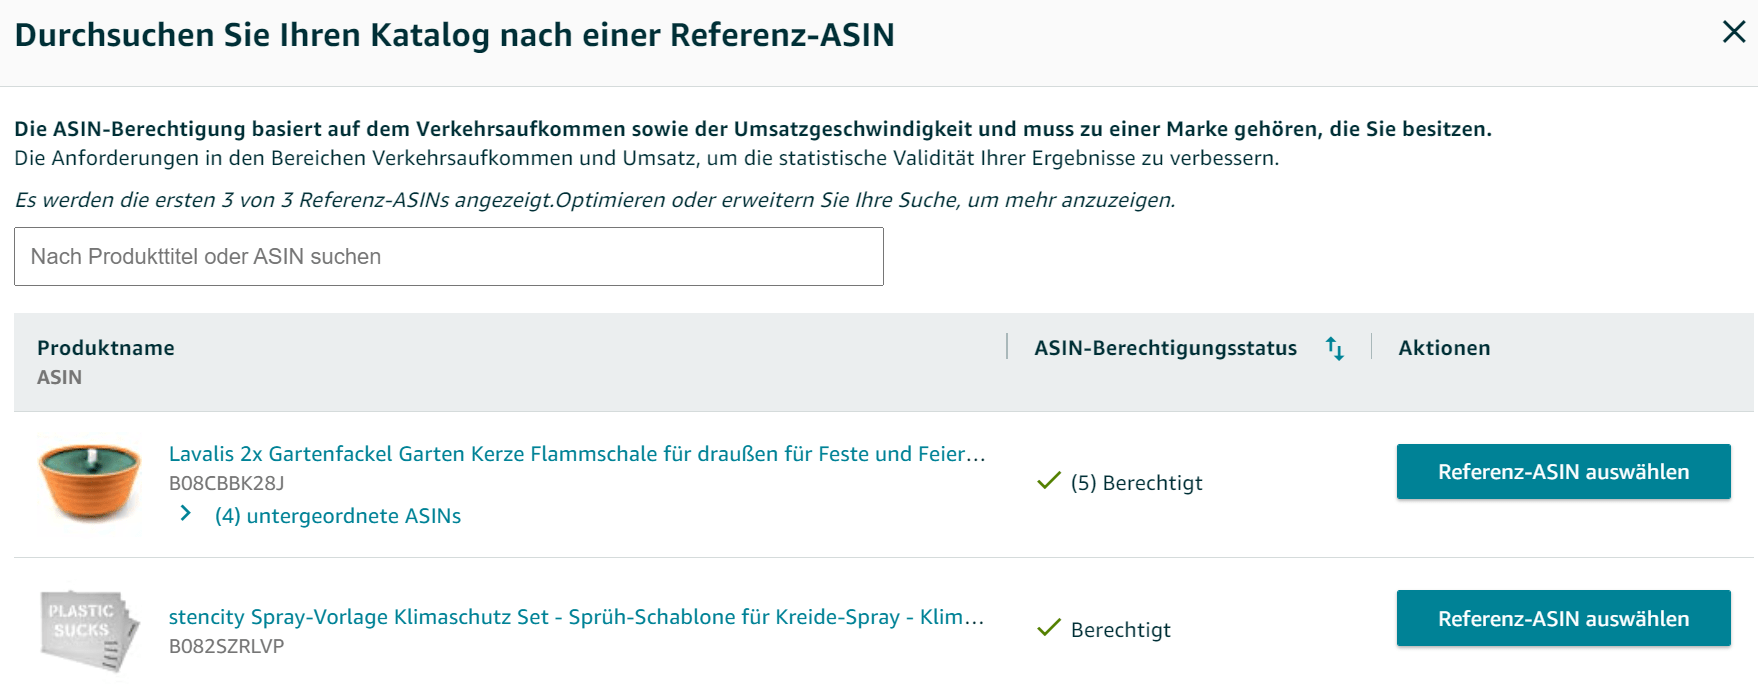 AB-Testing Katalog Referenz-ASIN